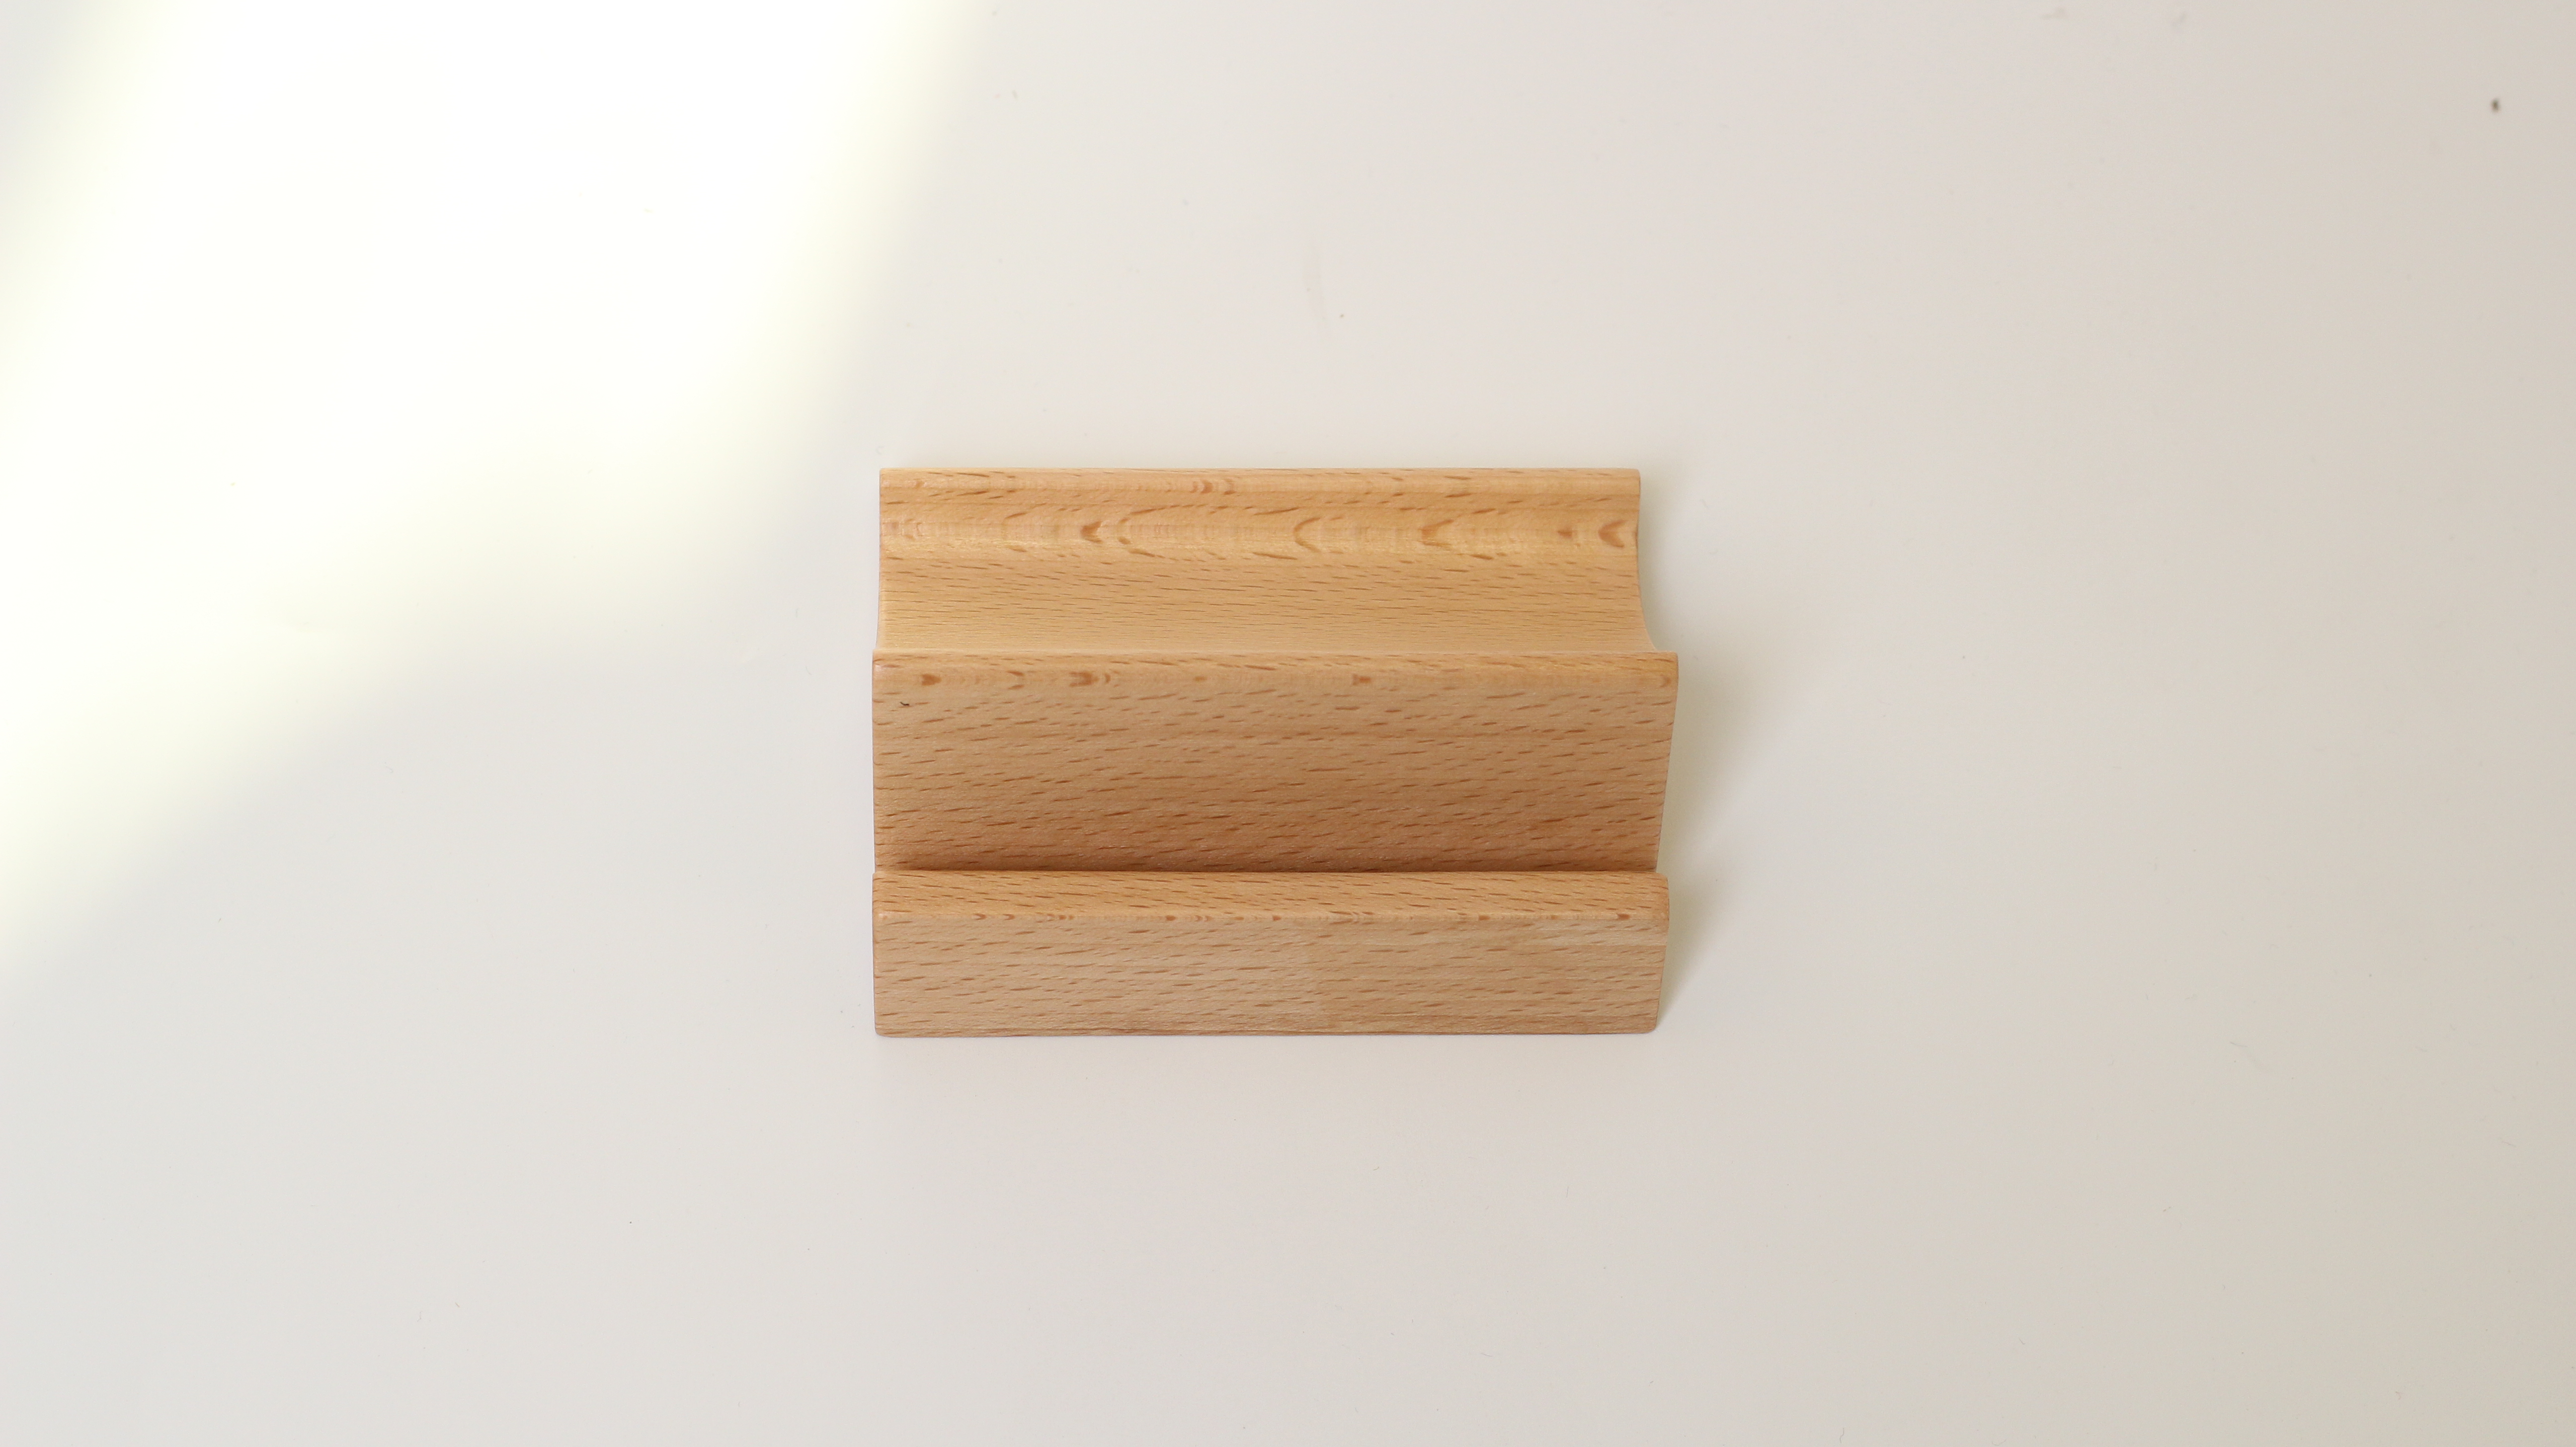 Irregular bamboo and wood mobile phone bracket